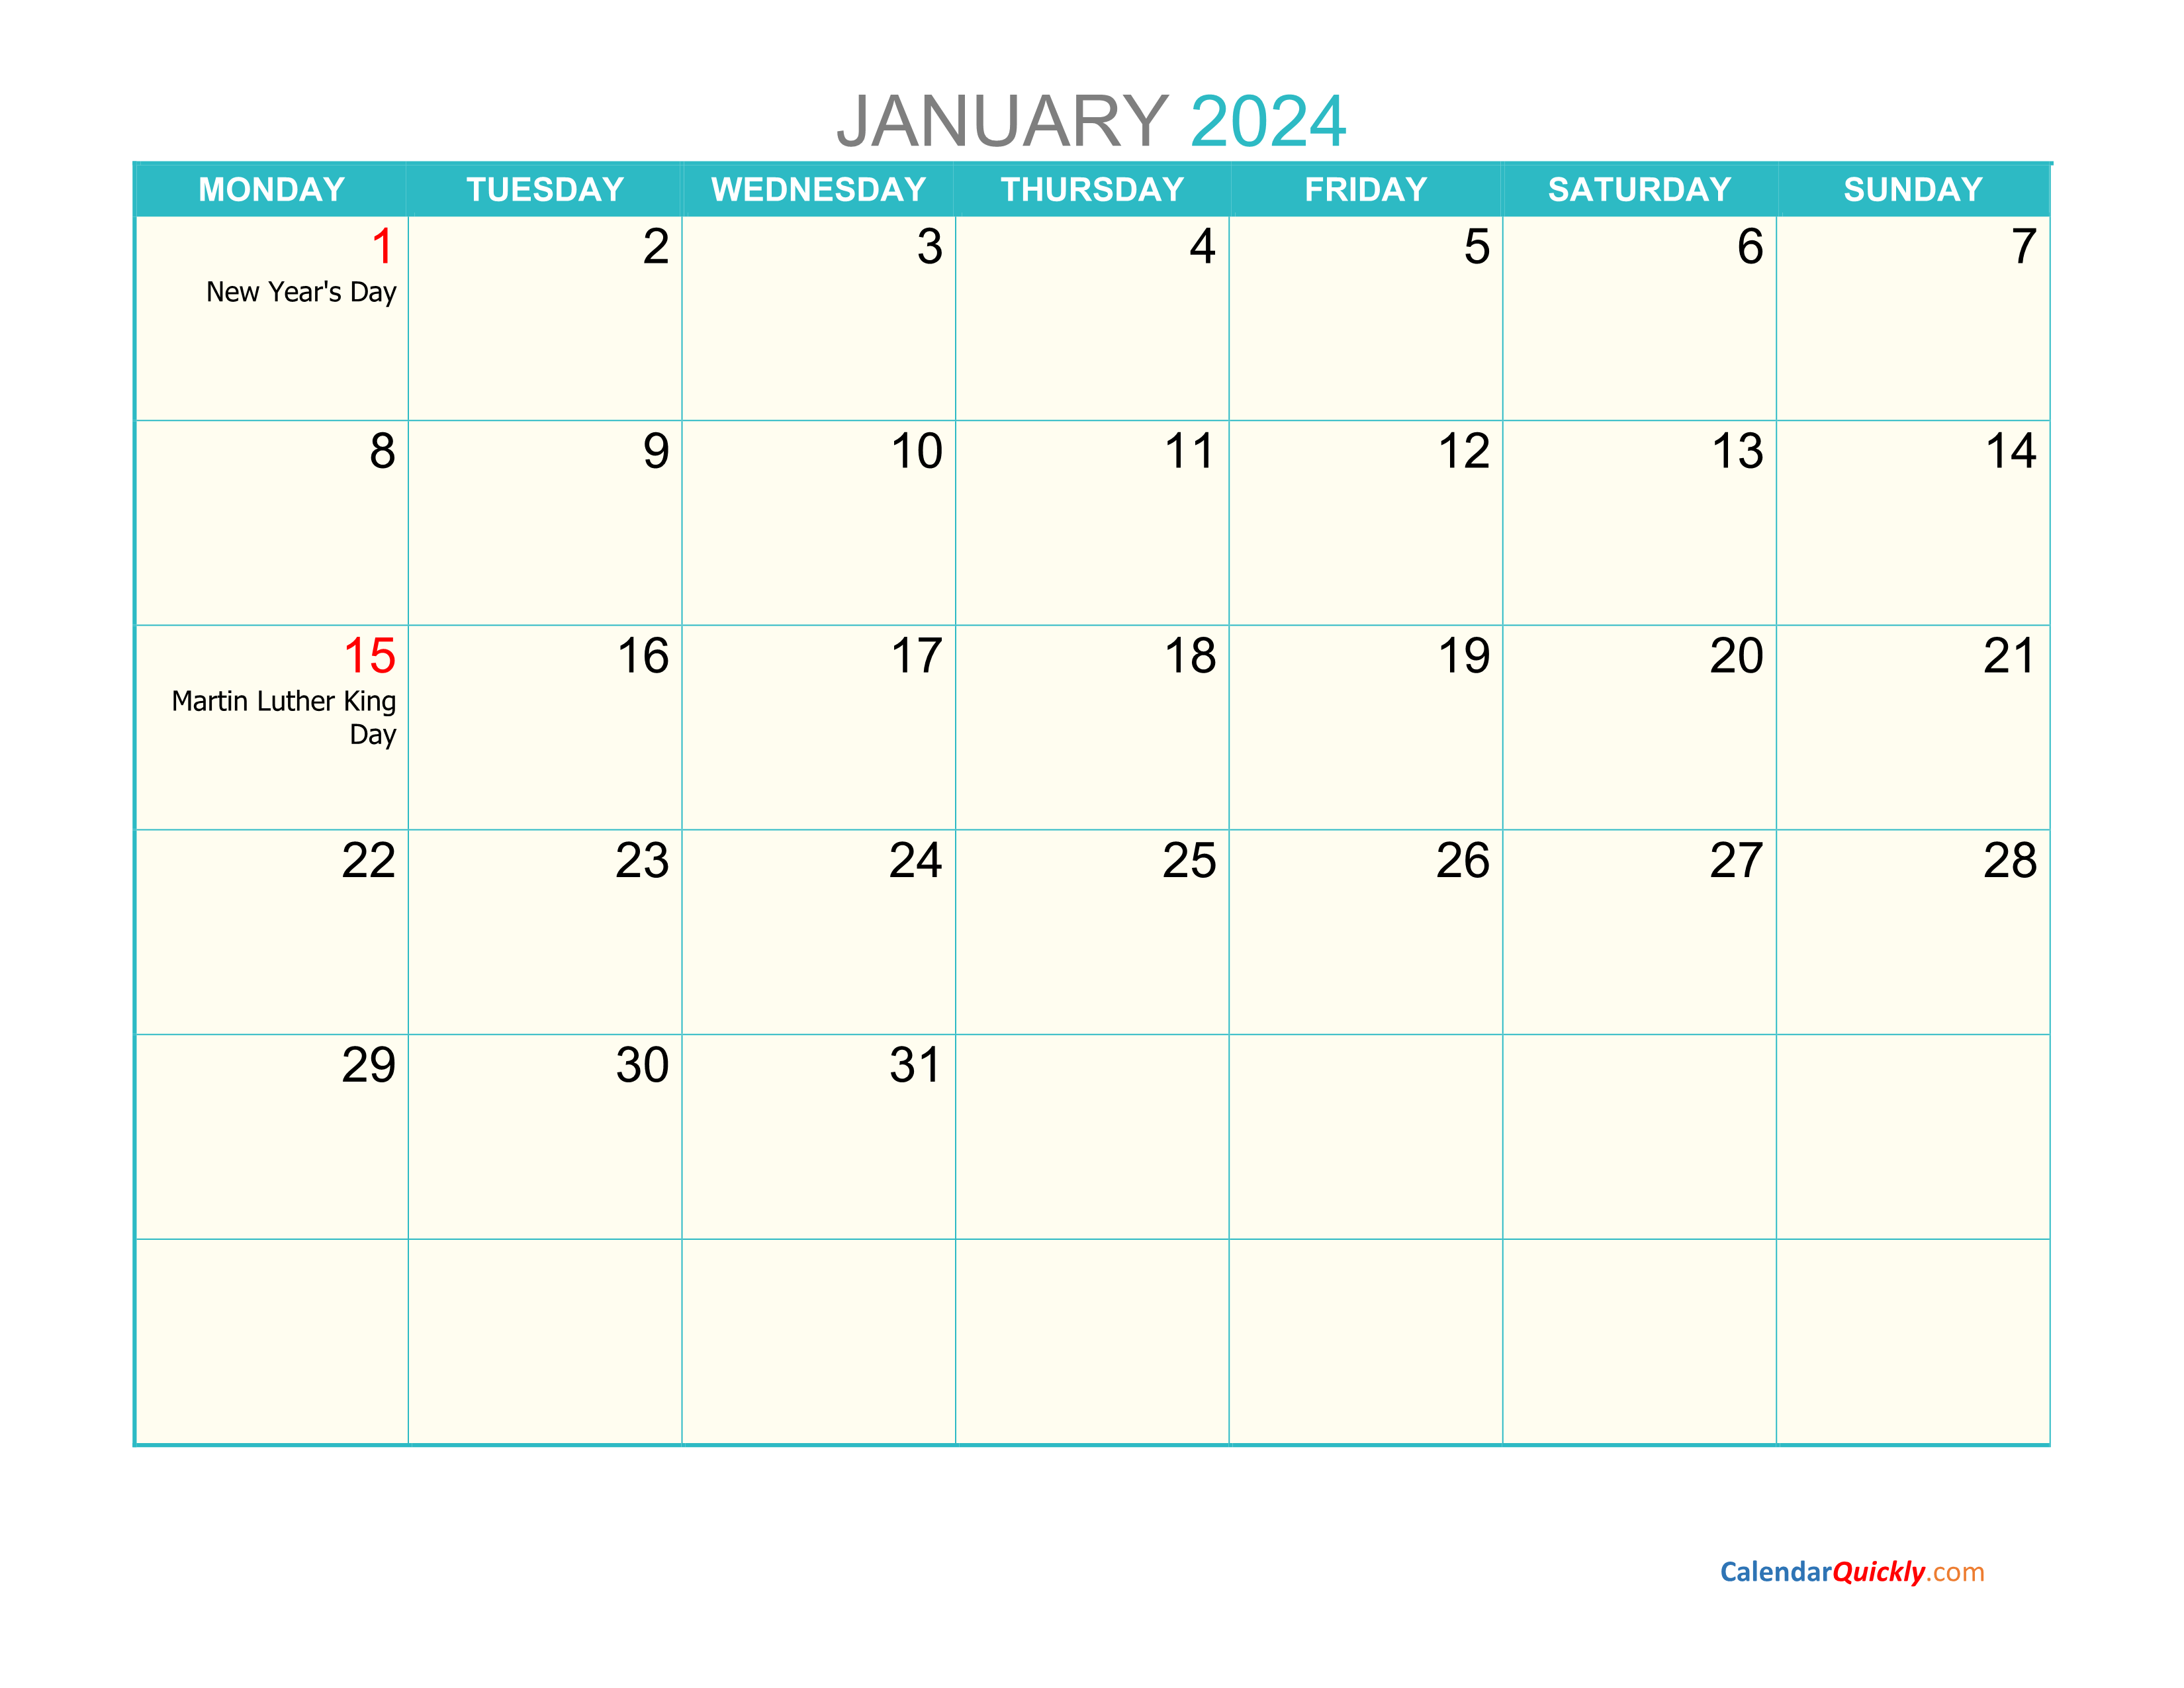 January Monday 2024 Calendar Printable Calendar Quickly